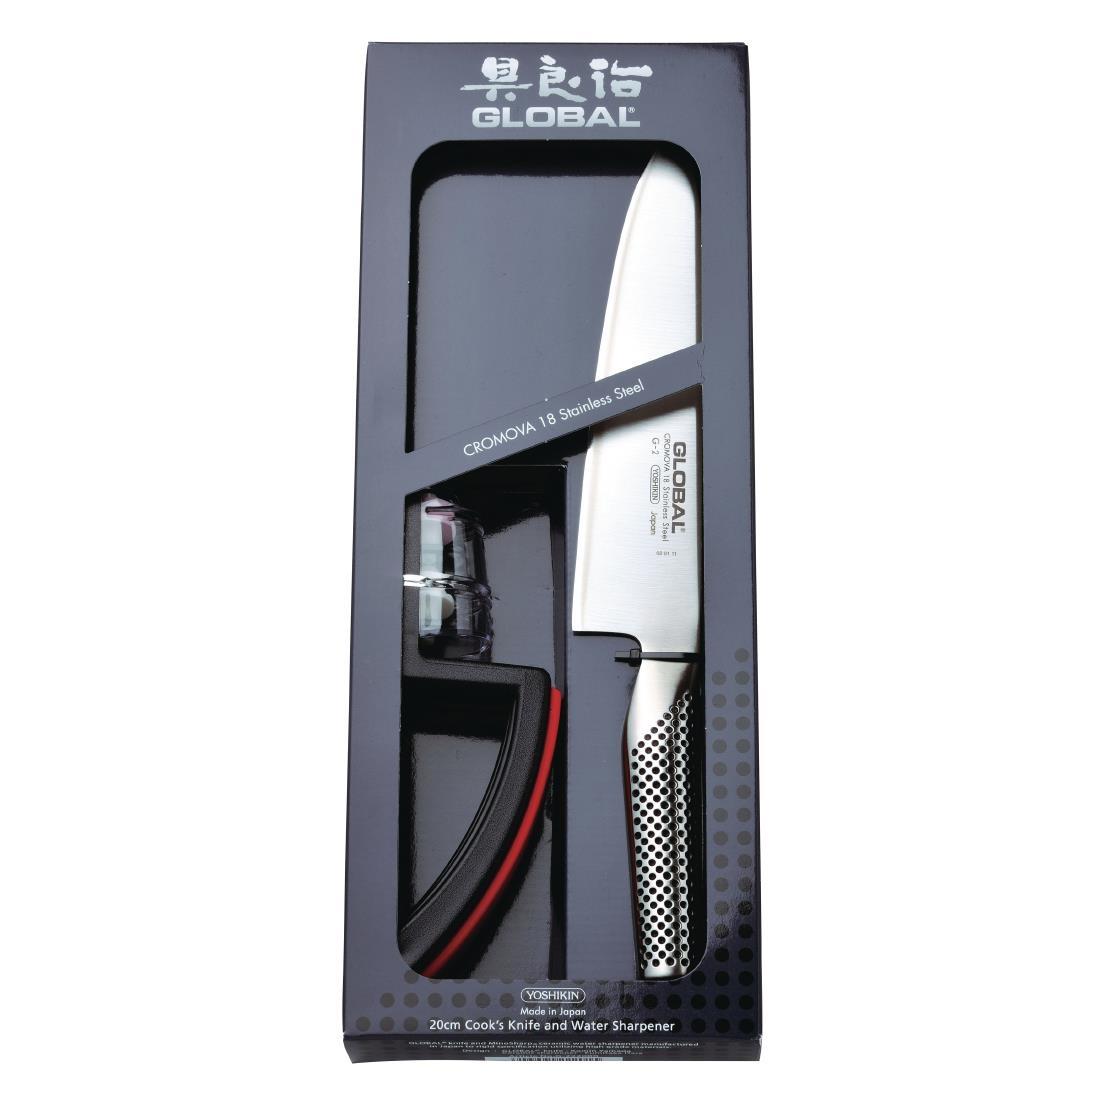 Global Classic Chefs Knife 20cm With Knife Sharpener - DG016  - 4